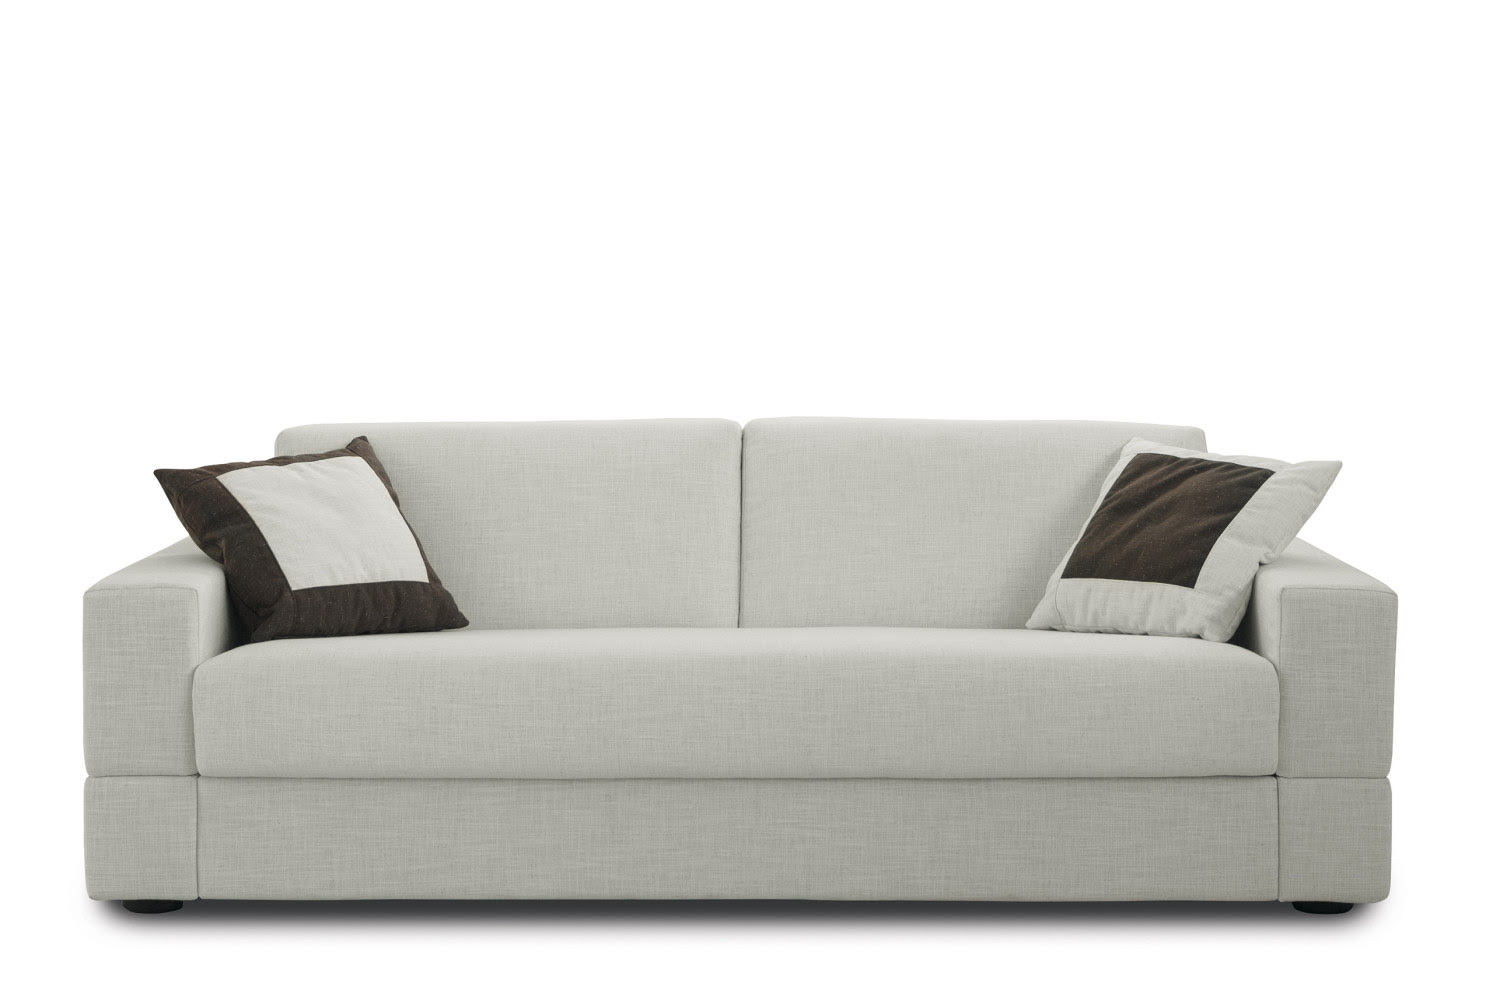 sprung sofa bed ebay